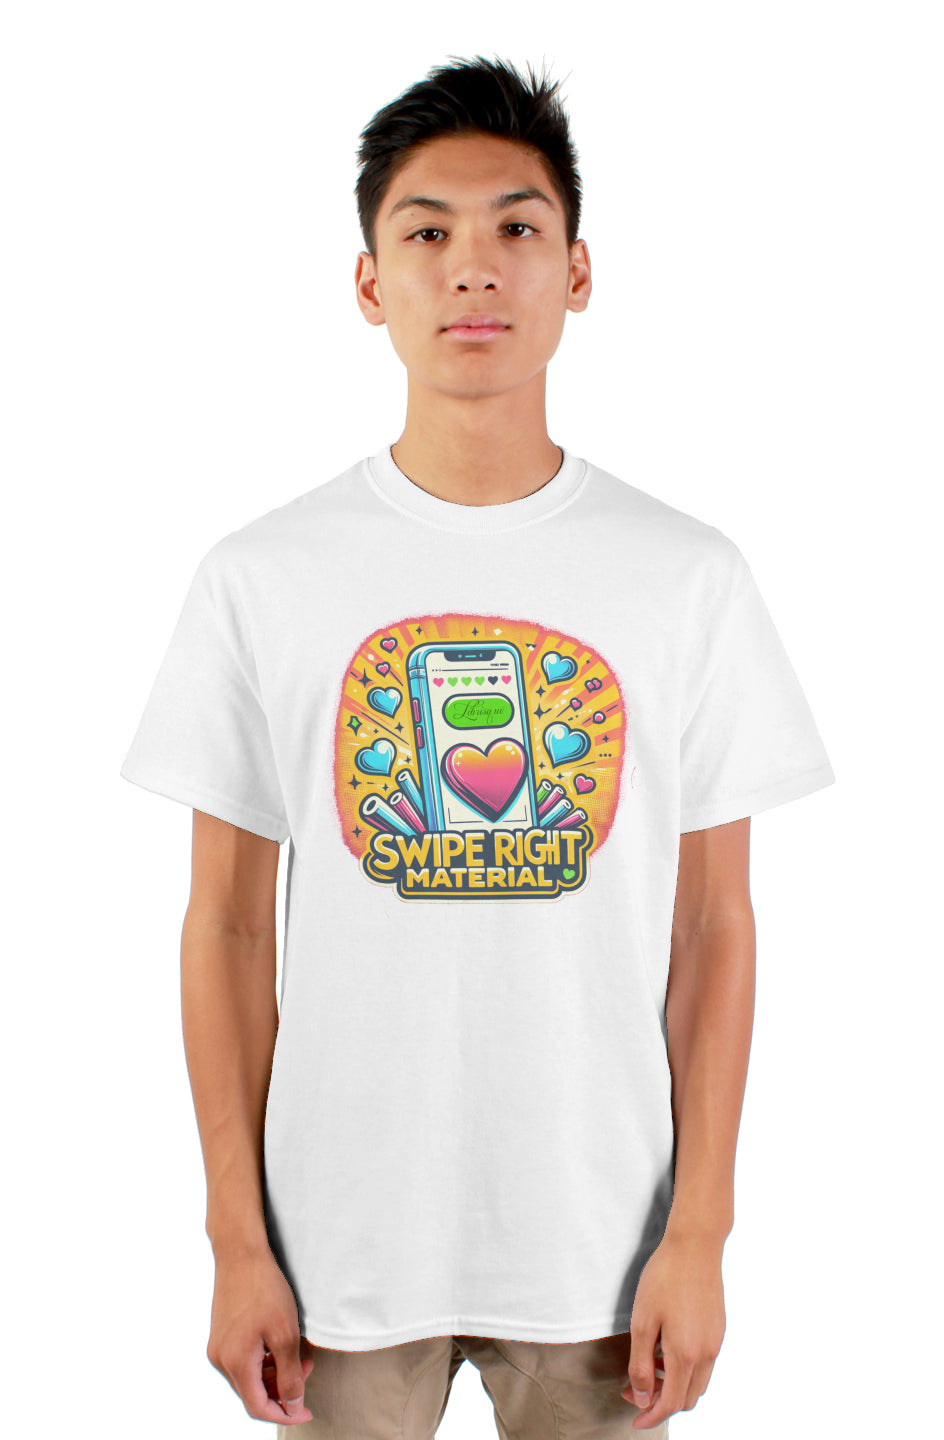 "Swipe Right Material" T-Shirt